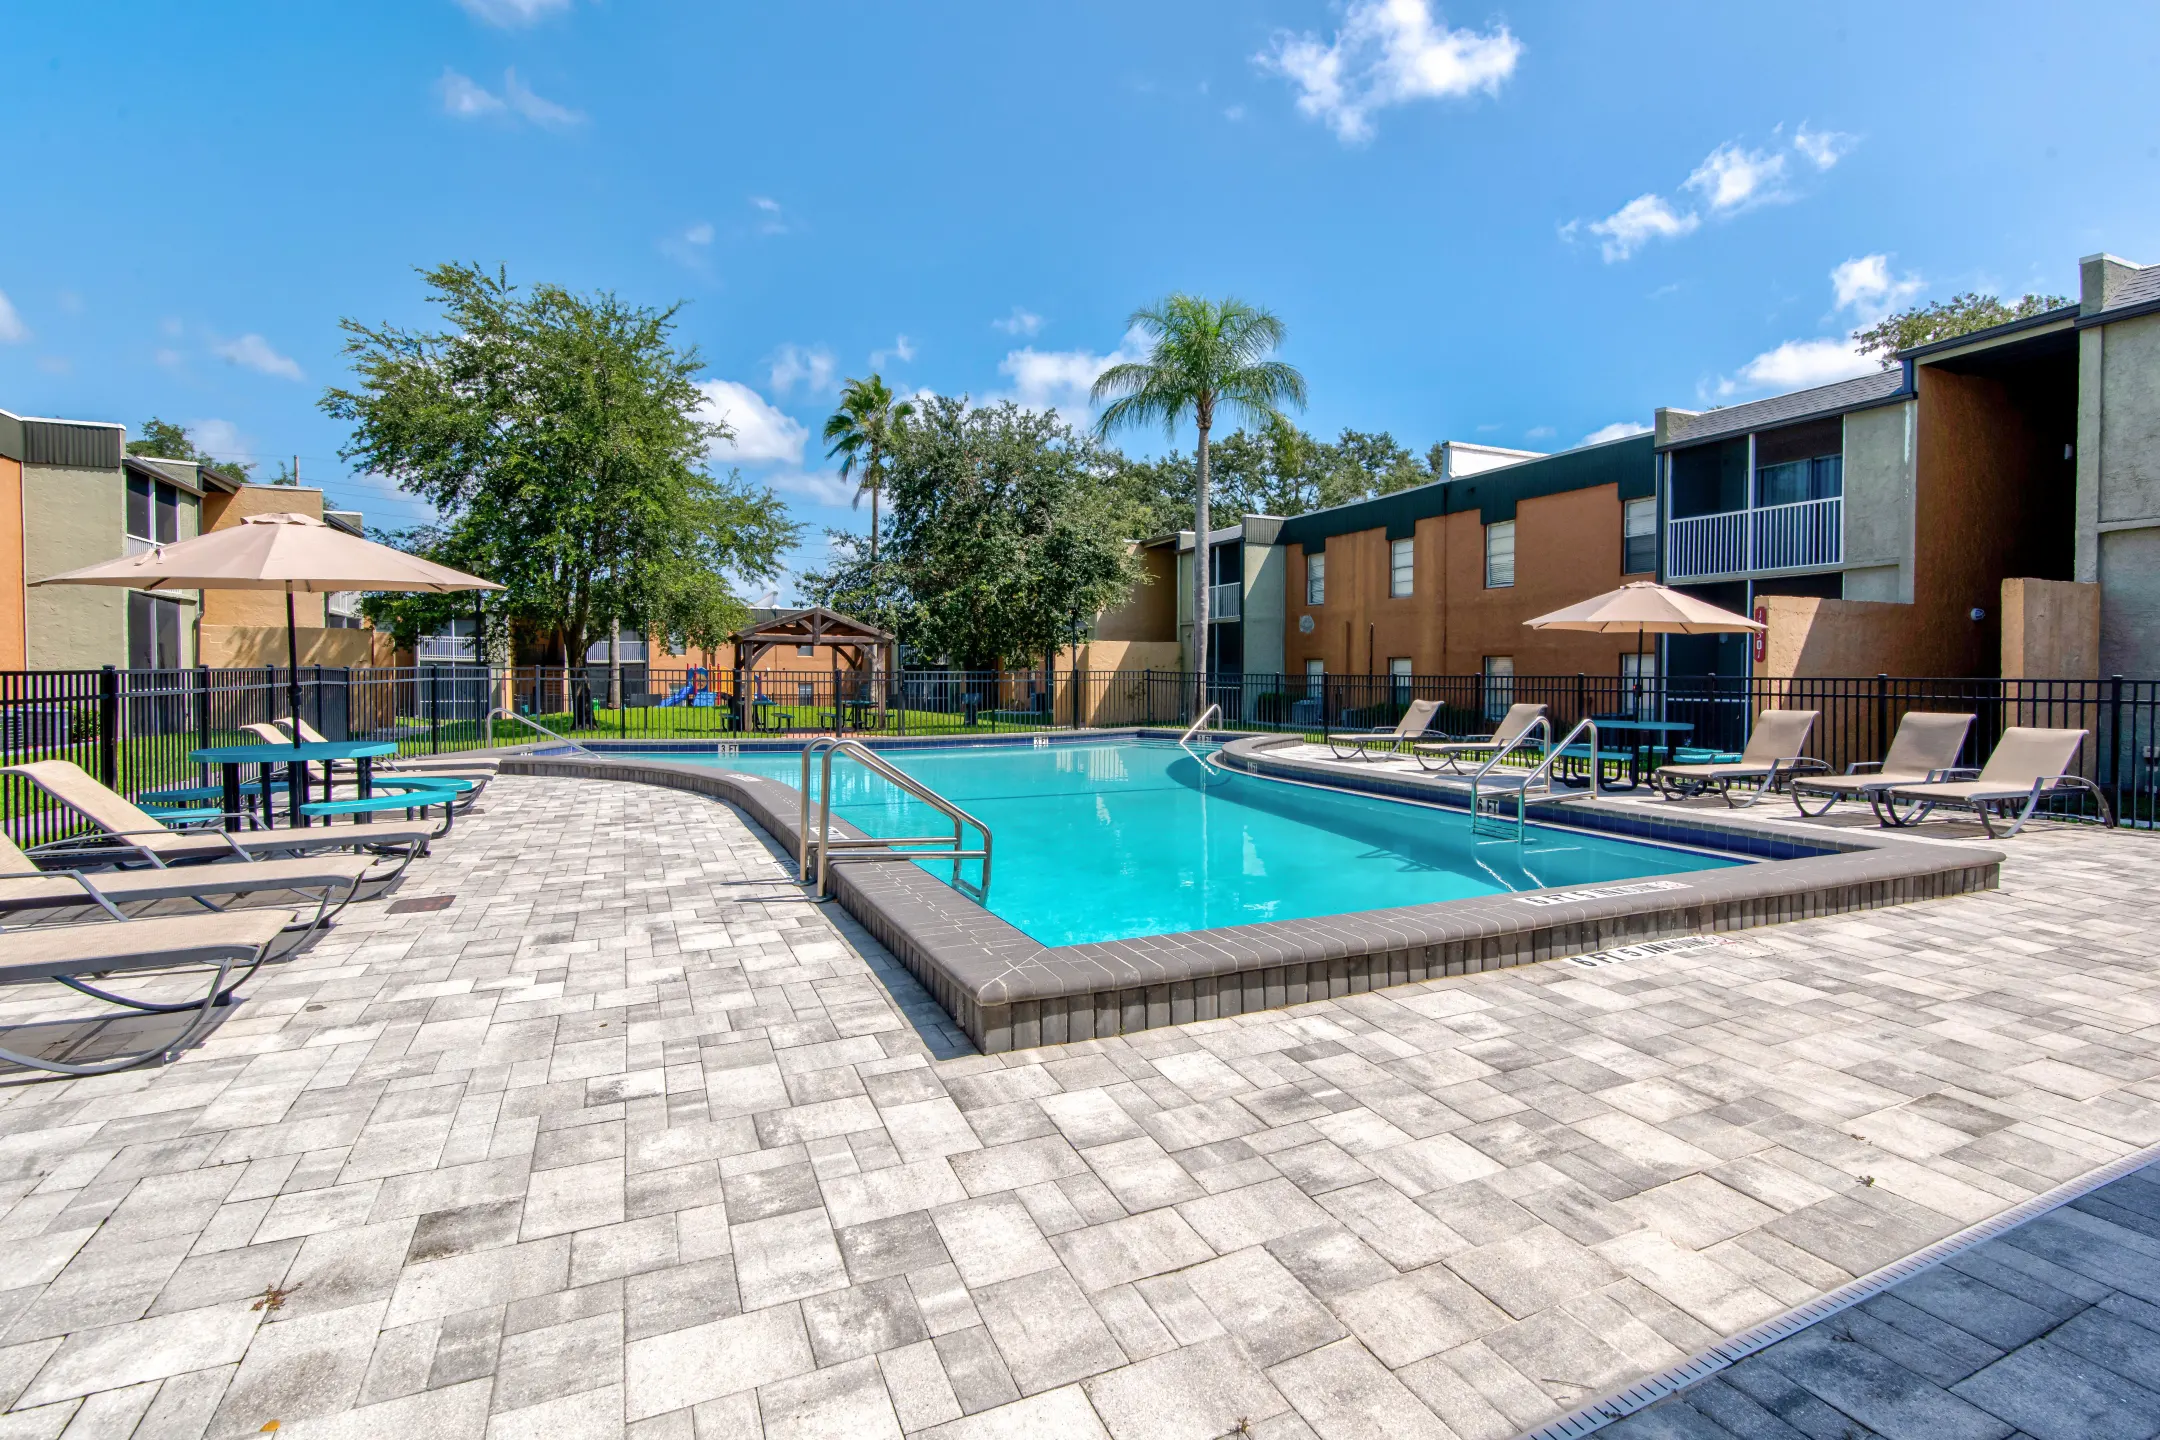 Pool - River Rock Apartments - Temple Terrace, FL